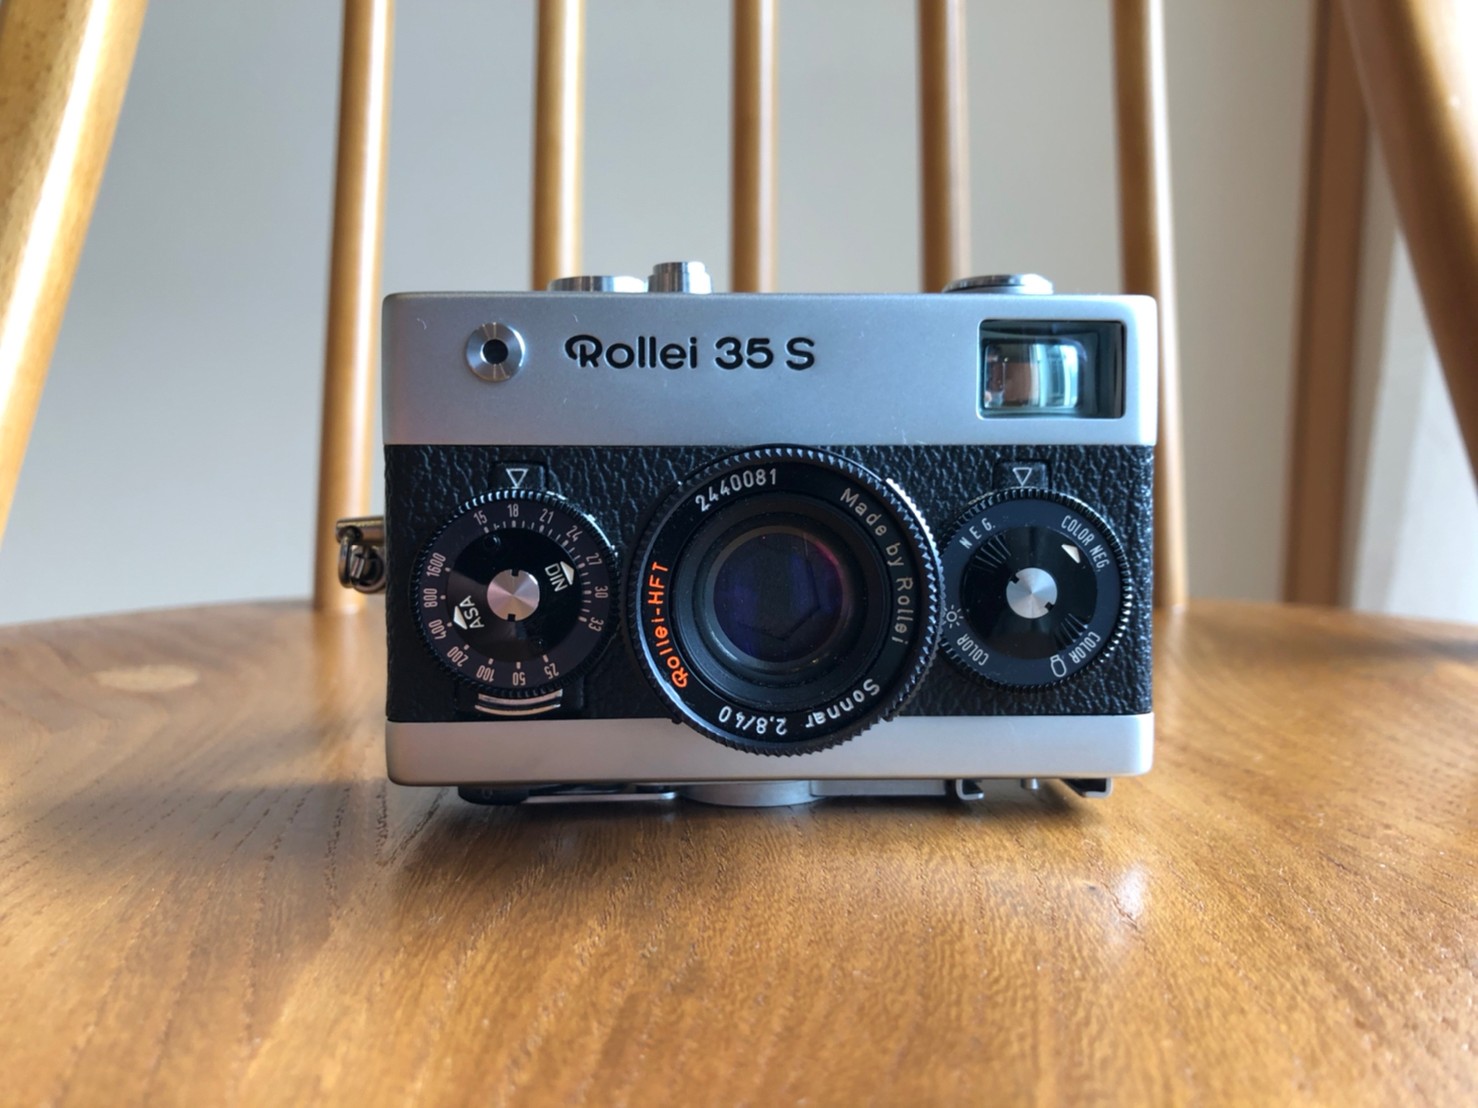 Rollei(ローライ)のカメラ Rollei35S で撮影した写真(画像)一覧と 